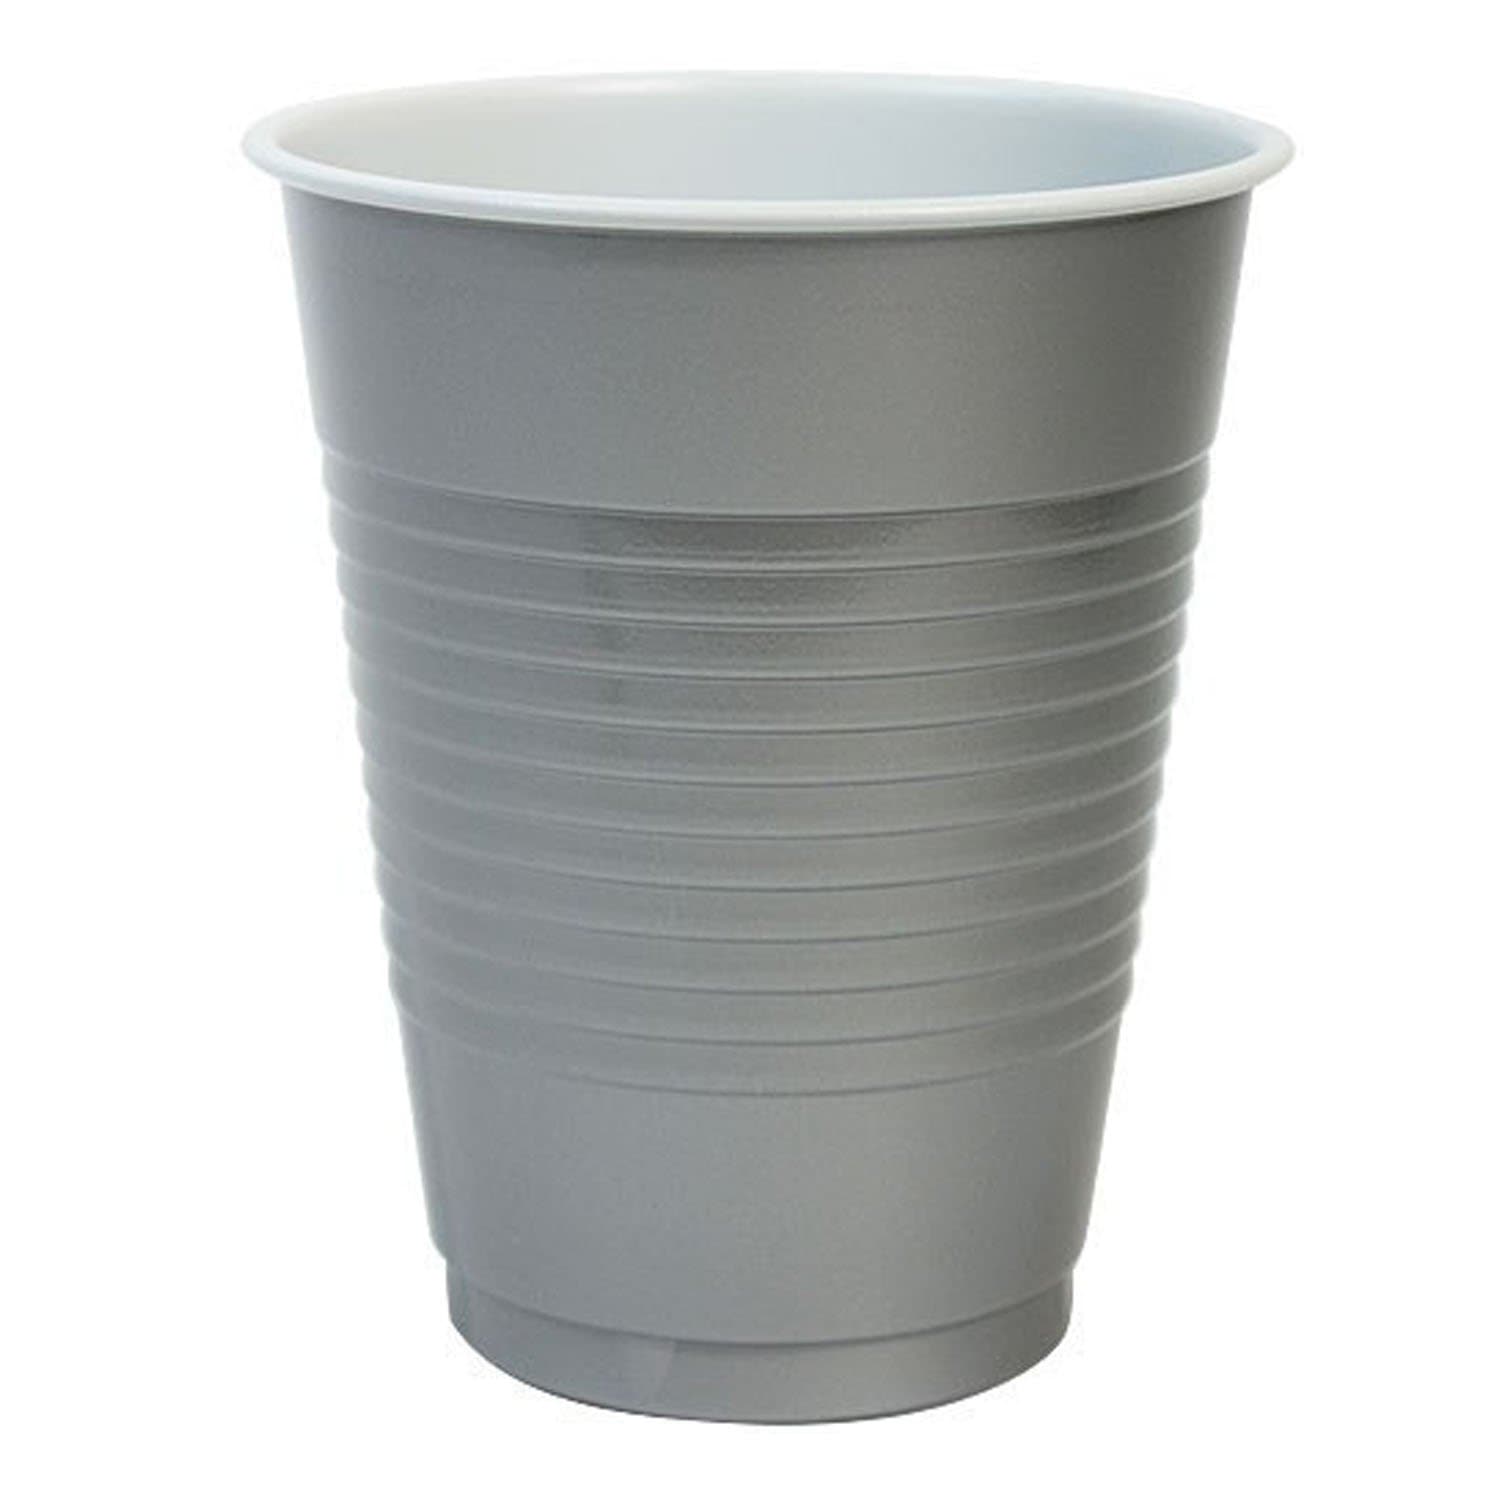 Hanna K Plastic Cups, Silver - 50 count, 18 oz each